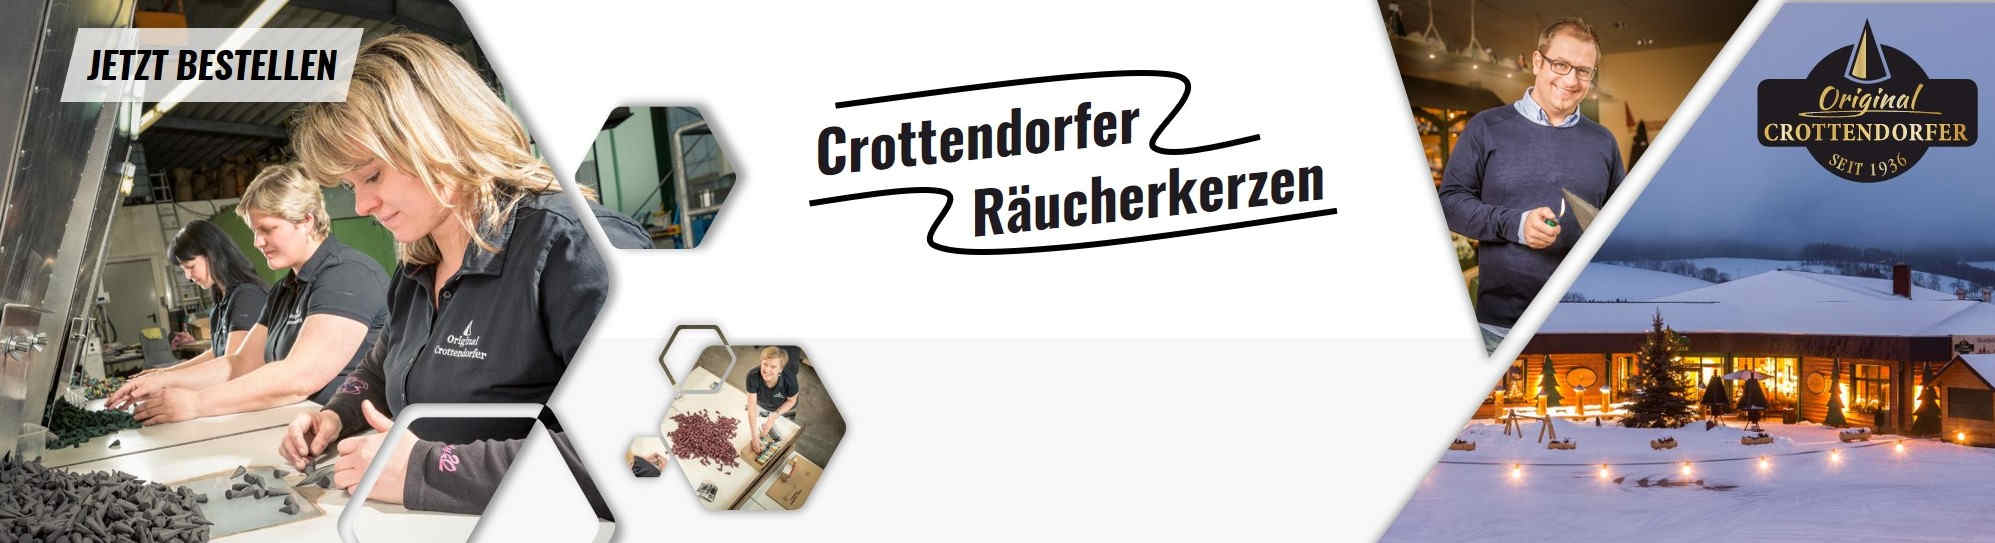 Crottendorfer Rucherkerzen im Dresden Onlineshop entdecken